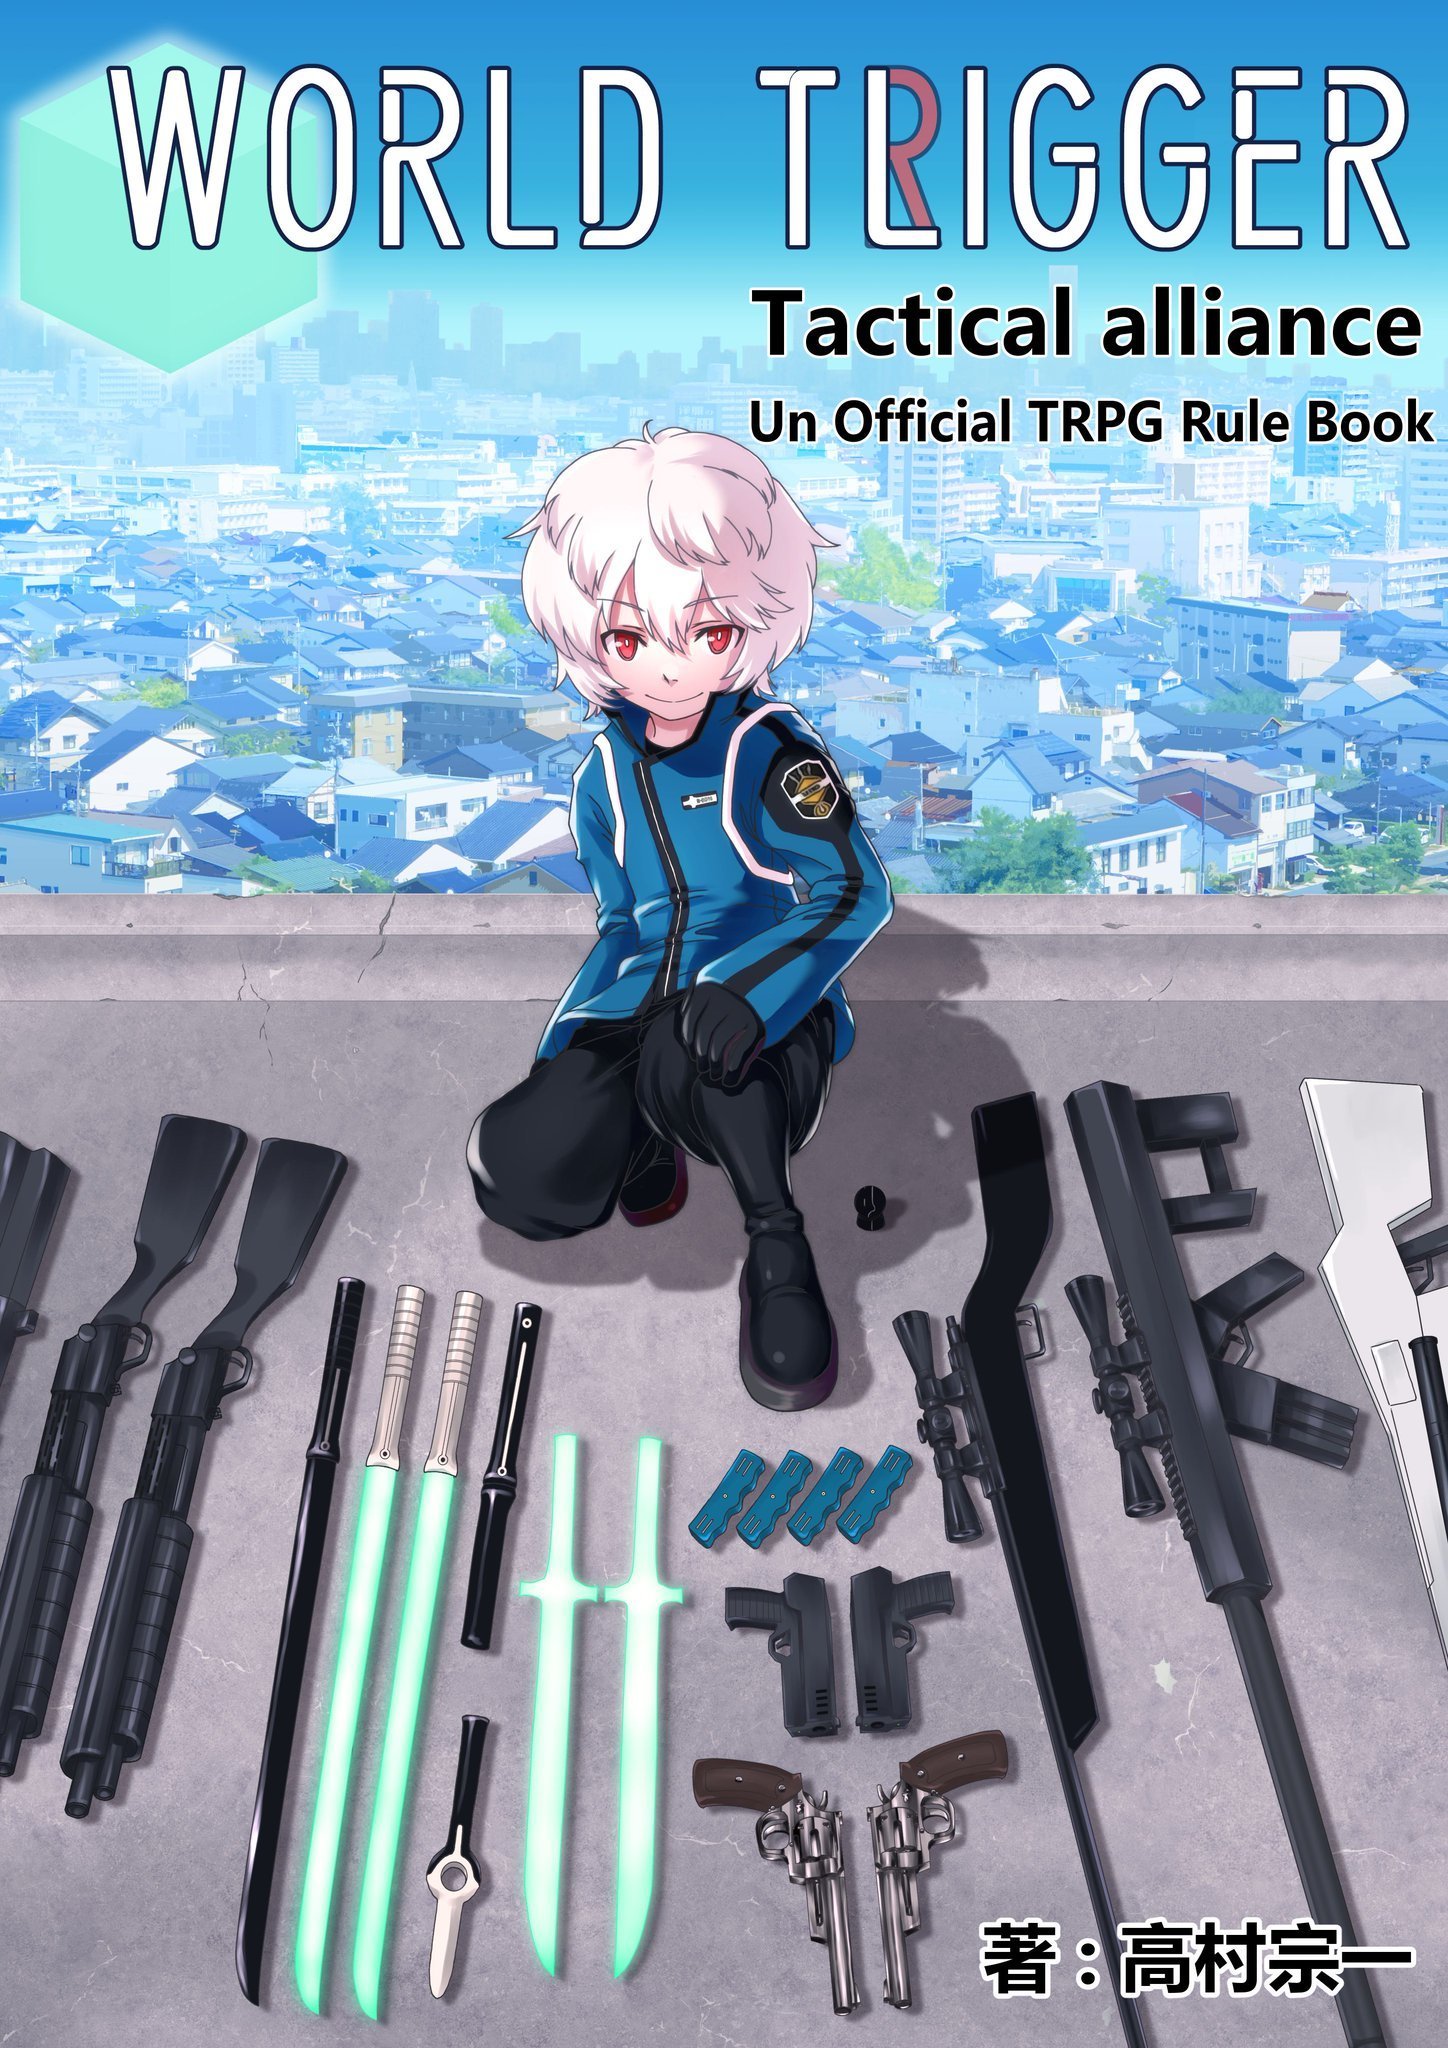 WORLD TLIGGER Tactical alliance